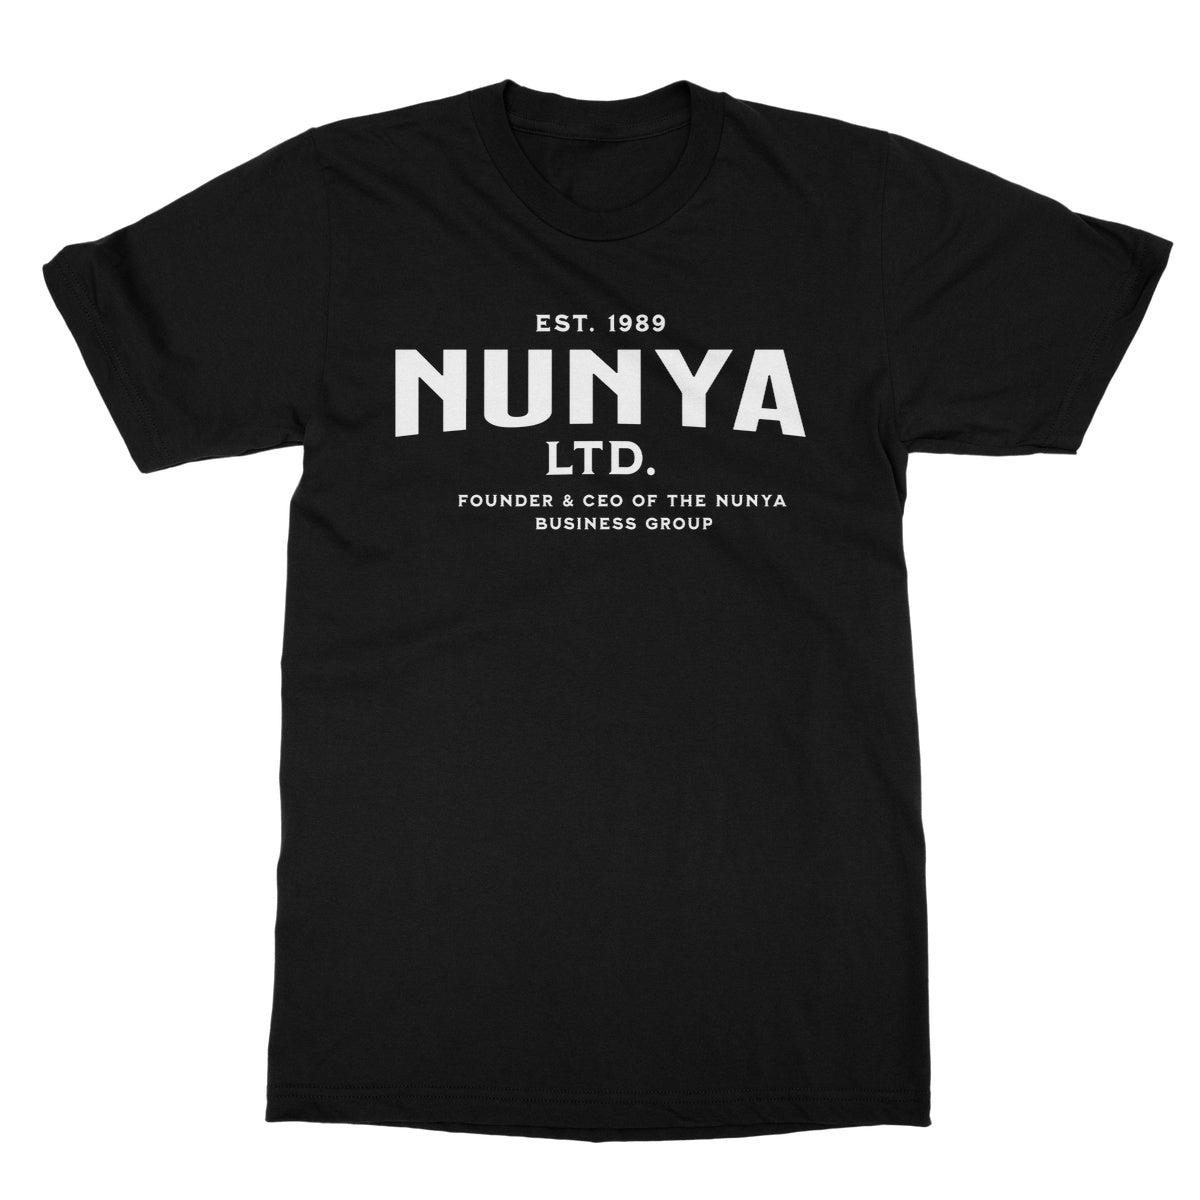 nunya business t shirt black